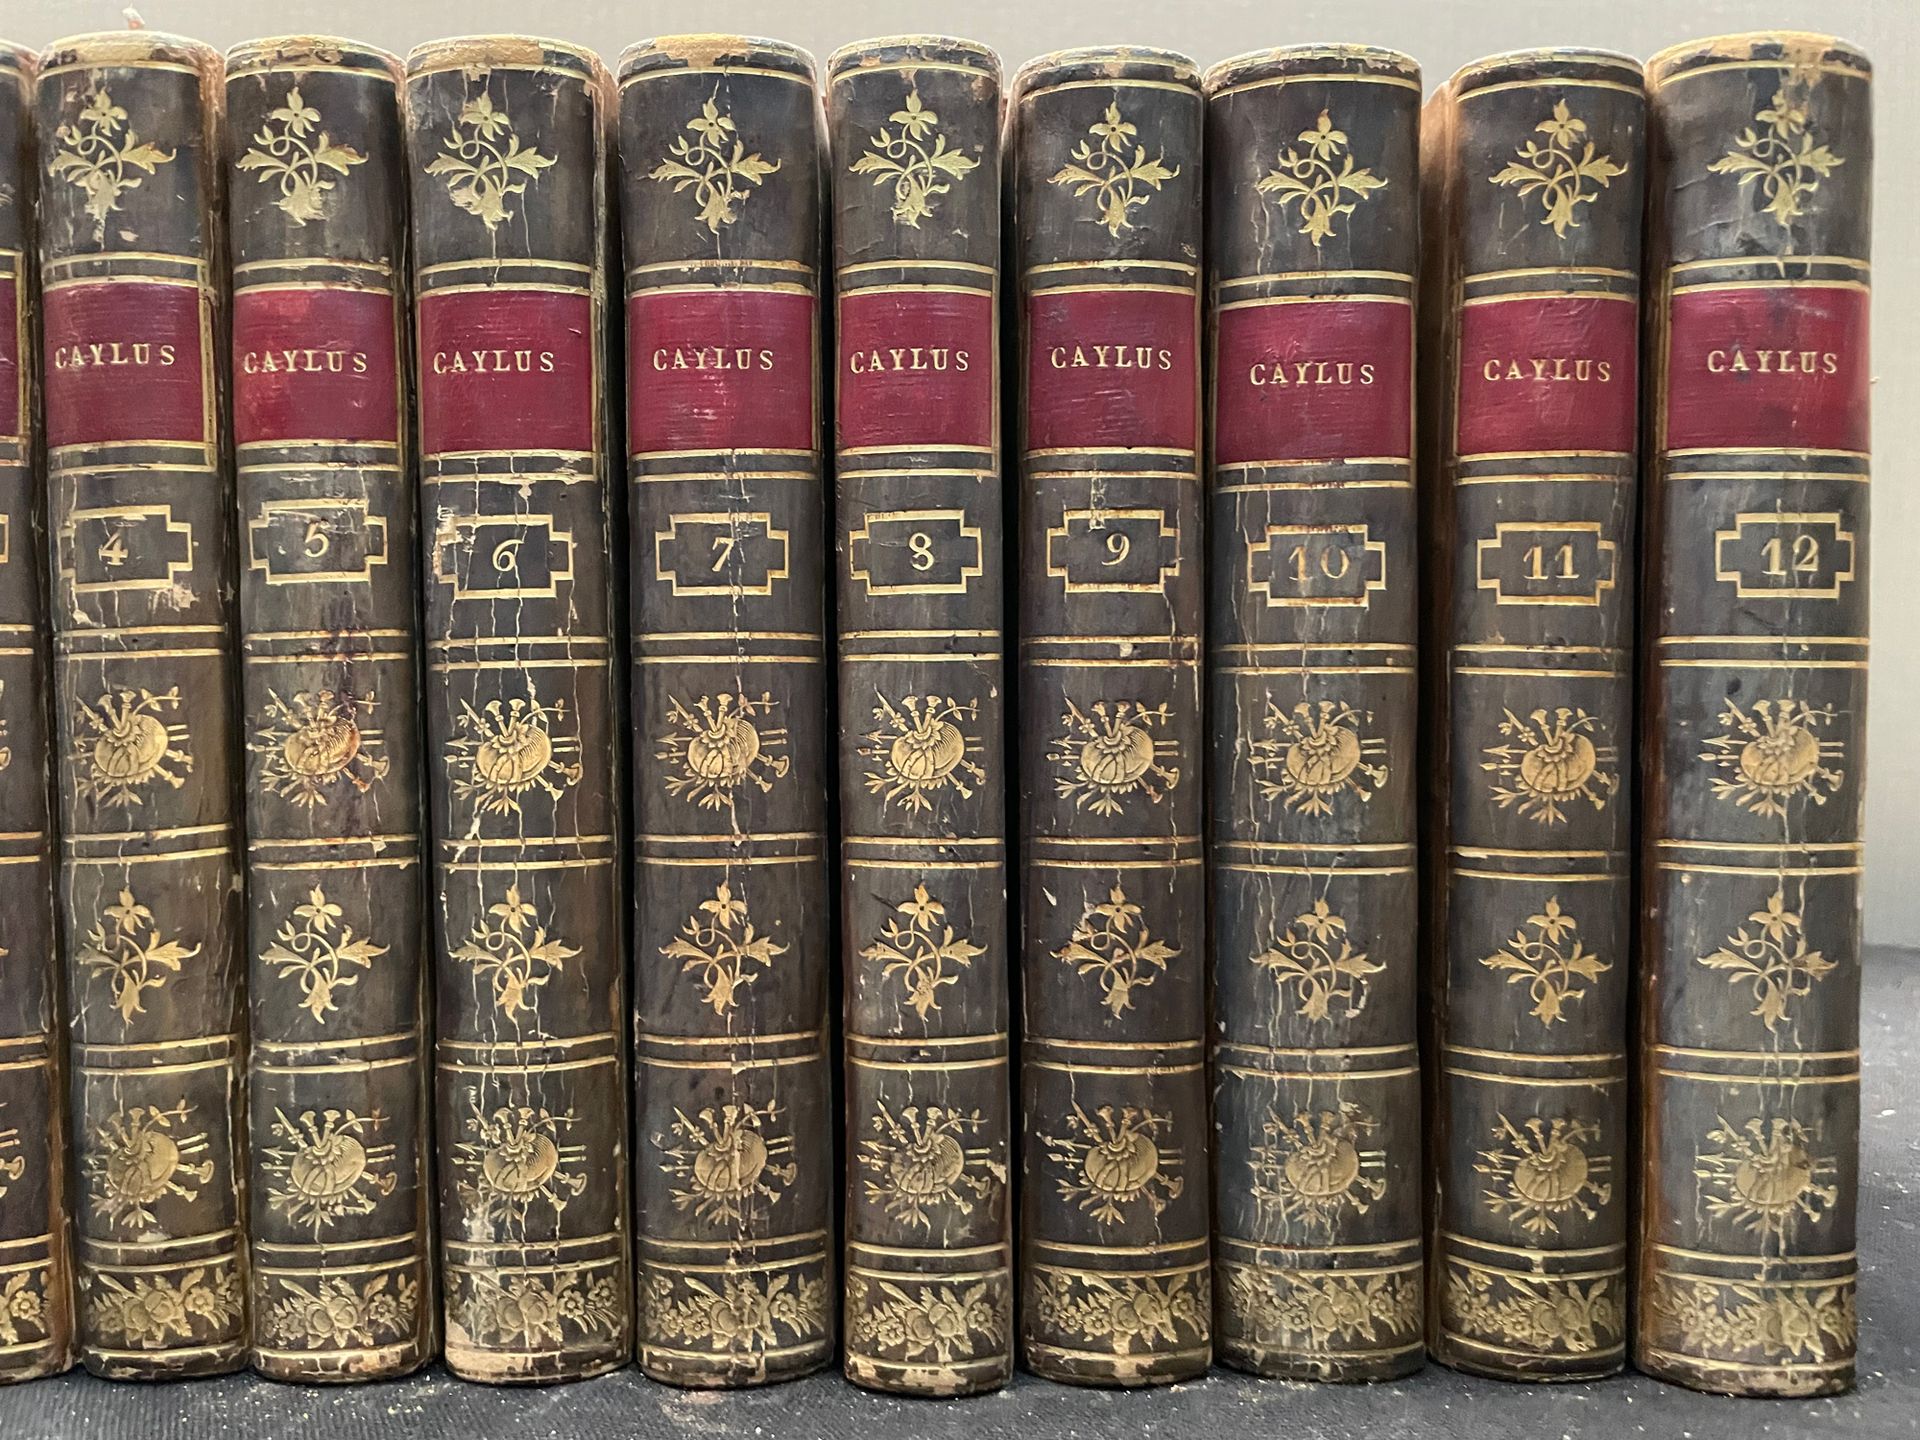 CAYLUS Oeuvres badines
Amsterdam, M. DCC. LXXXVII 12 volúmenes (tal cual)